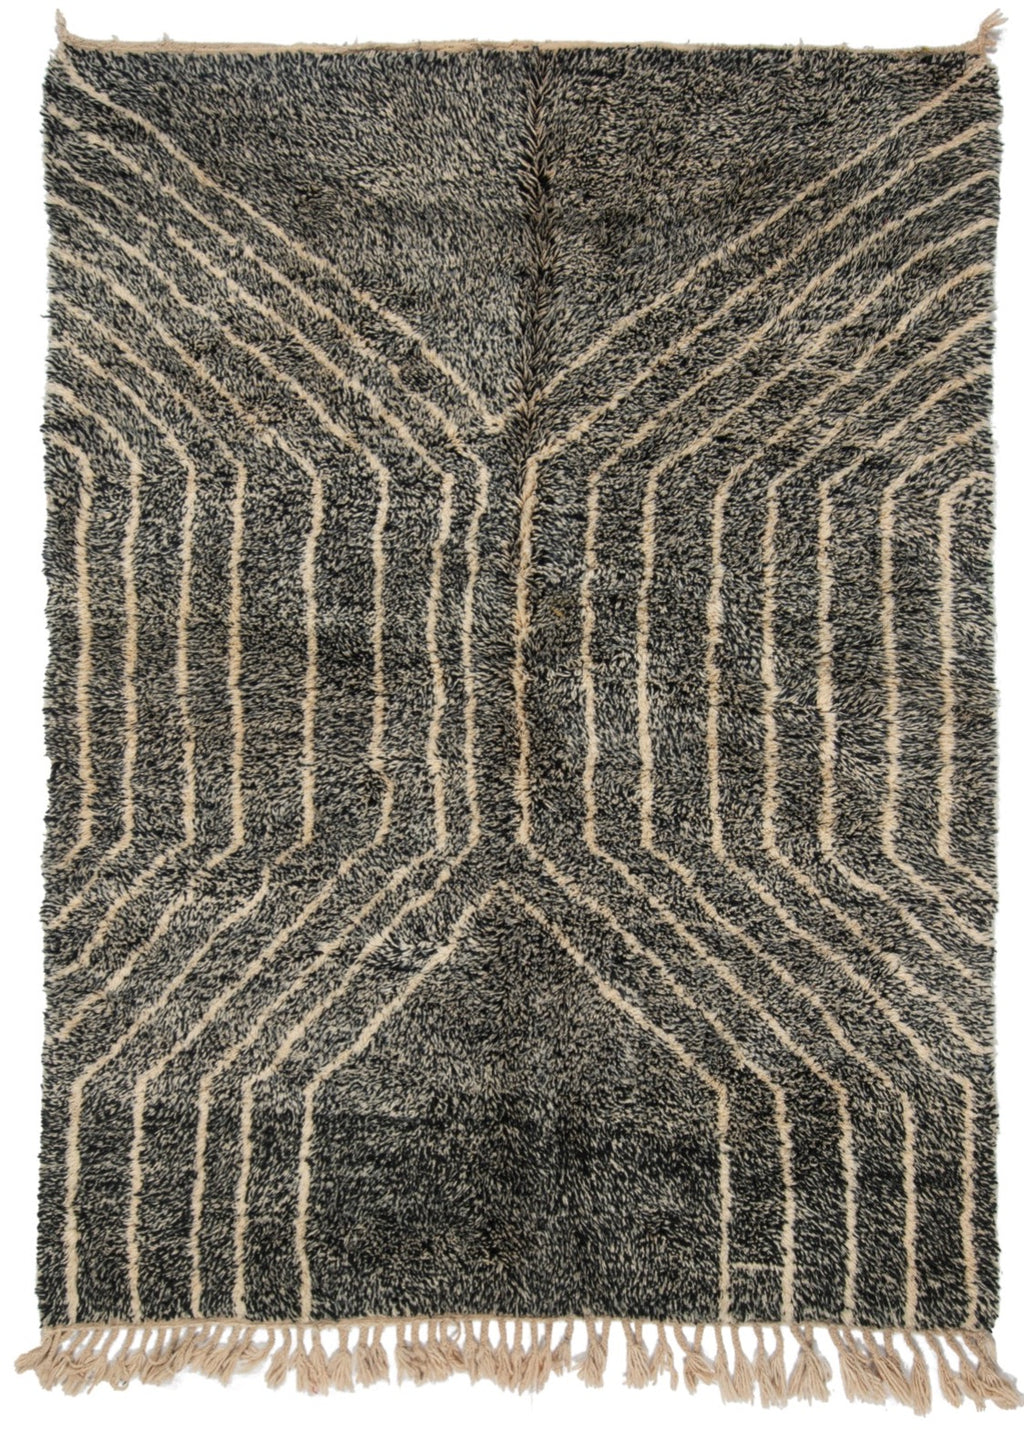 Infinitive line rug